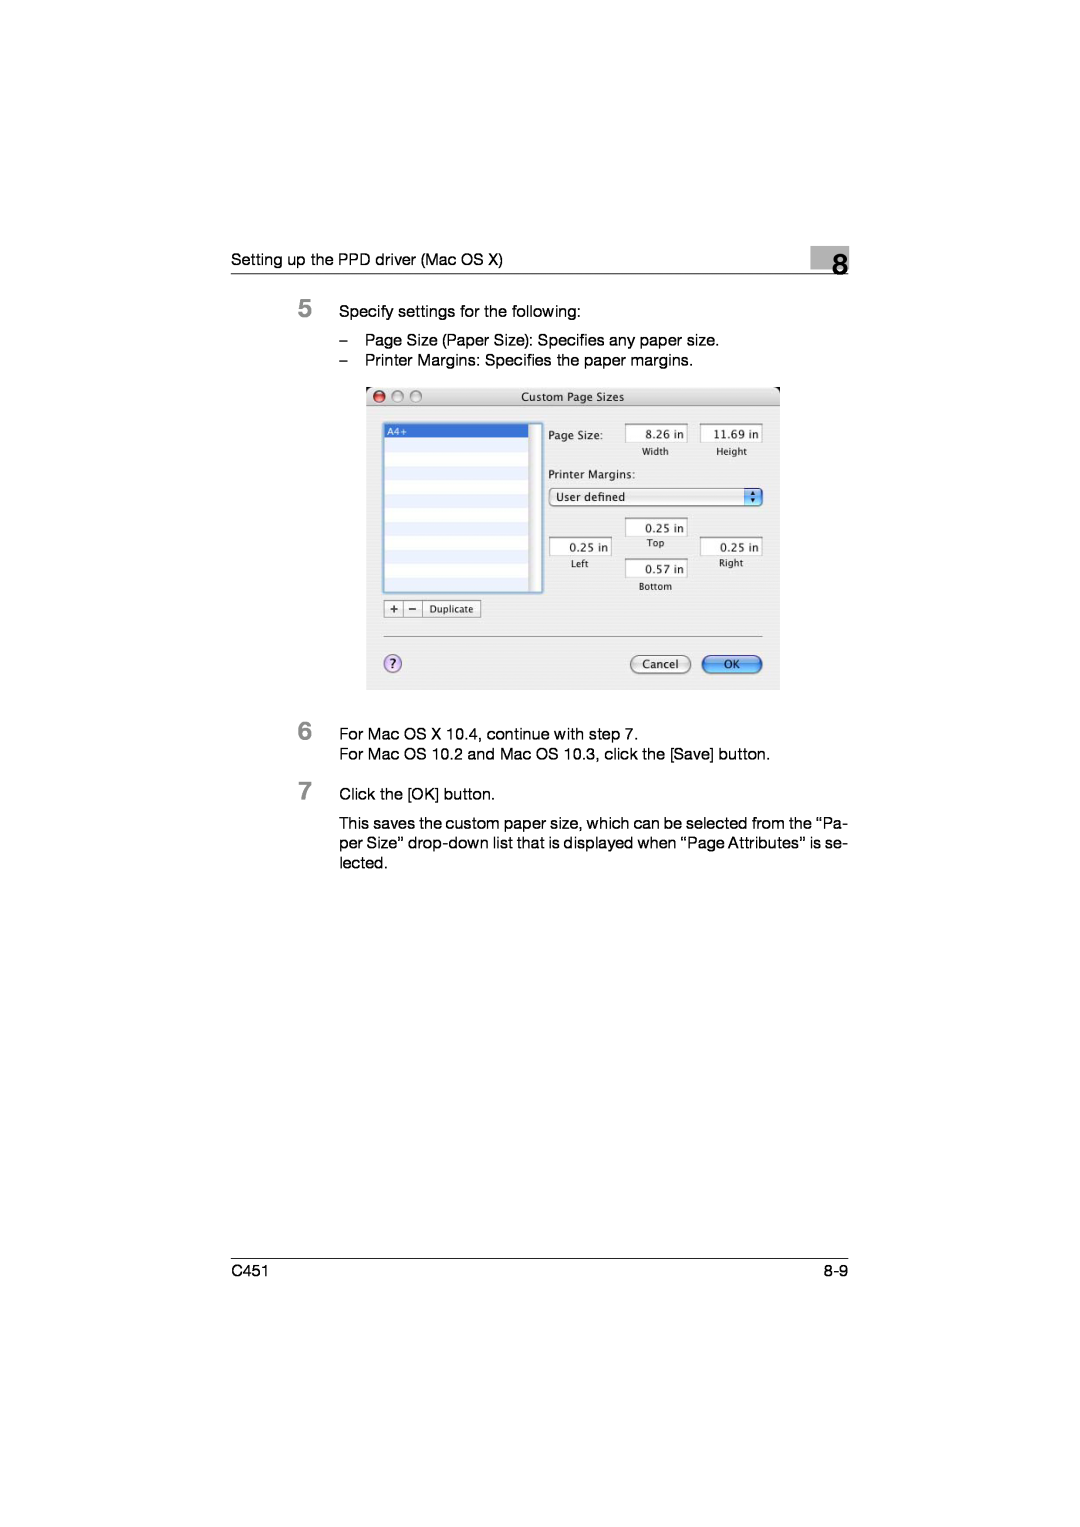 Konica Minolta C451 manual Setting up the PPD driver Mac OS 